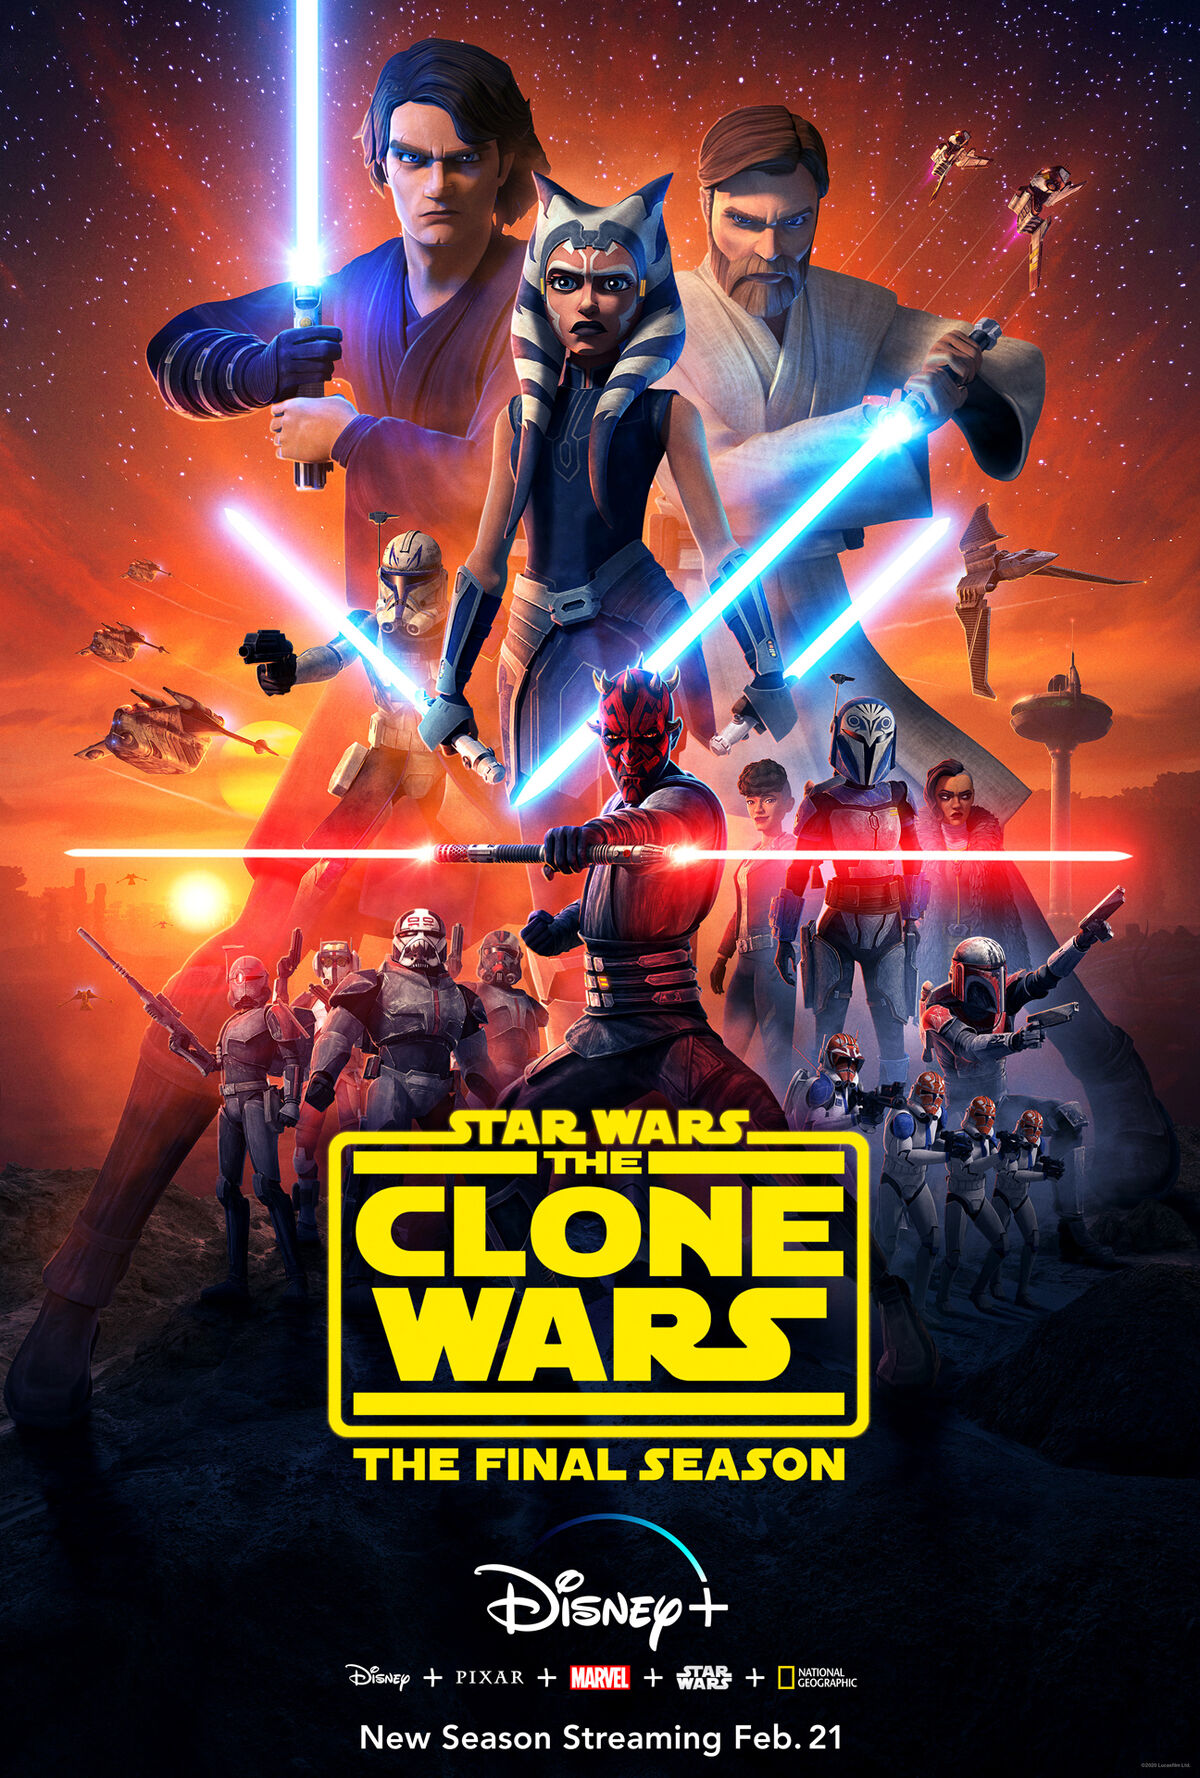  Star Wars: The Clone Wars - The Final Season (Episodes